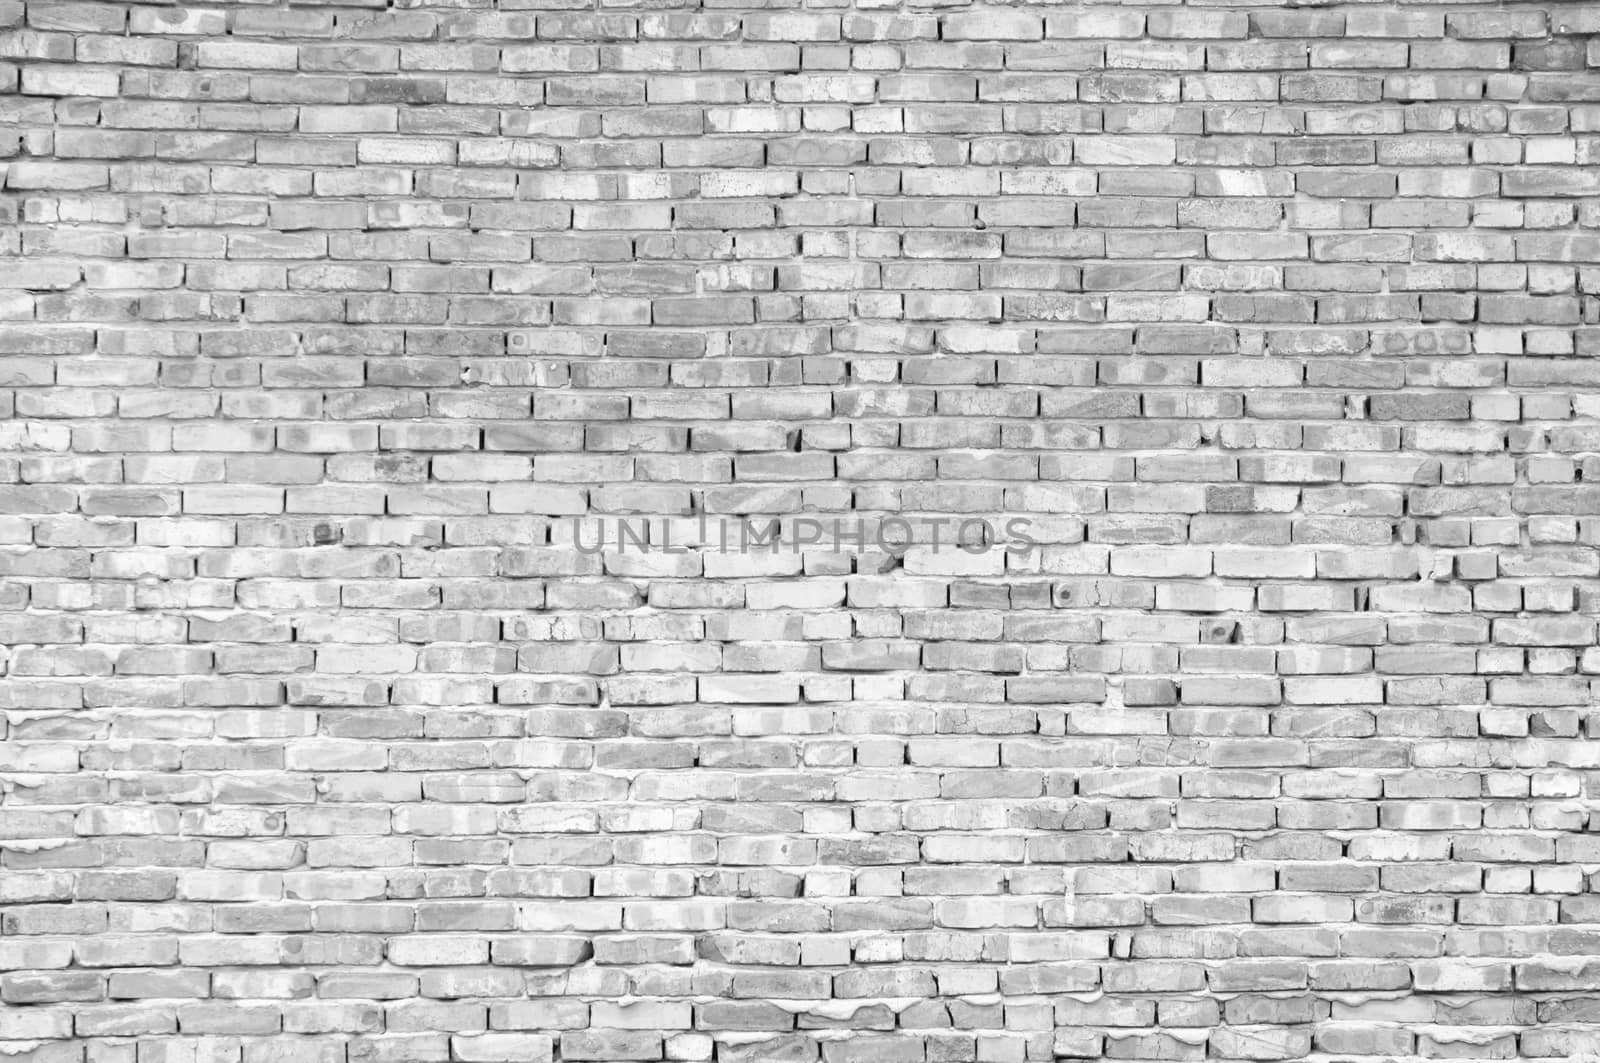 Textured old brick wall background,monochrome